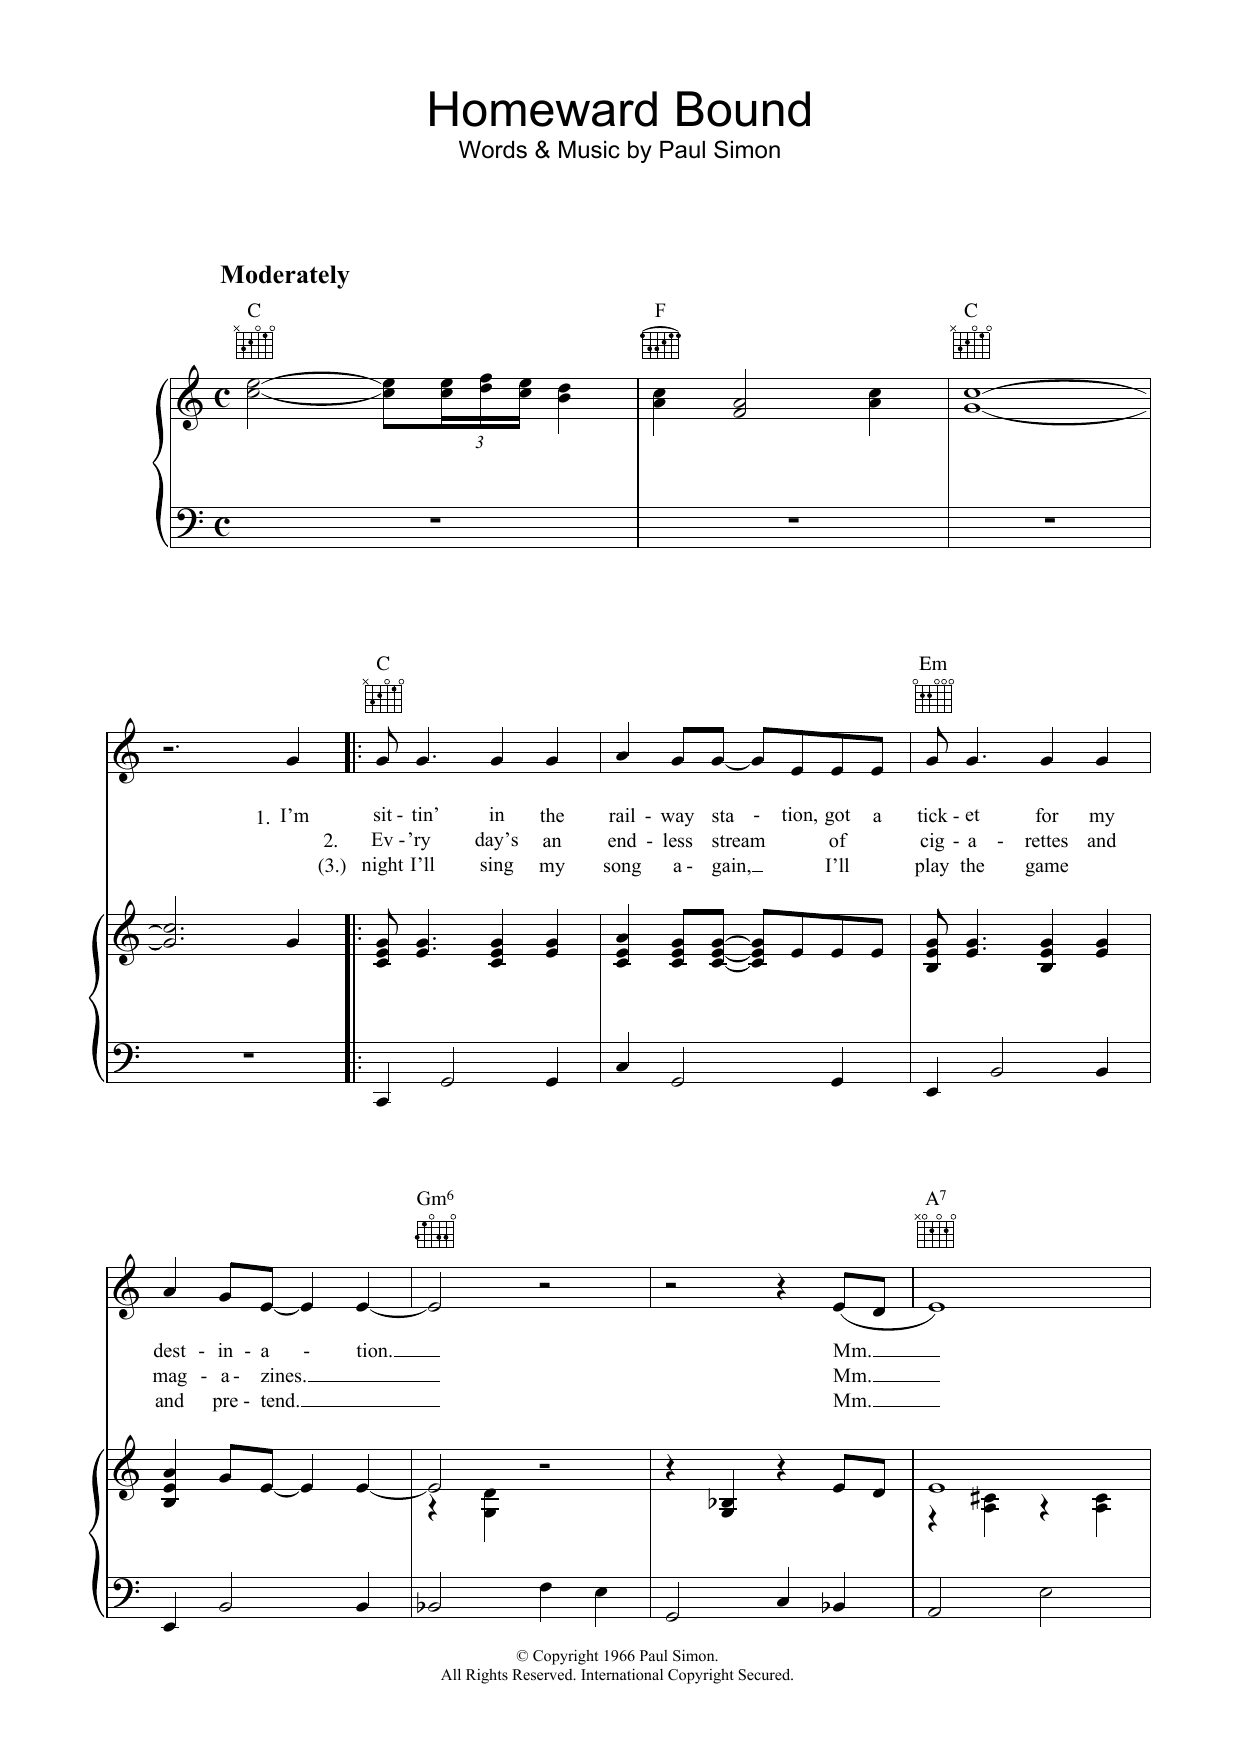 Download Simon & Garfunkel Homeward Bound Sheet Music and learn how to play Ukulele Lyrics & Chords PDF digital score in minutes